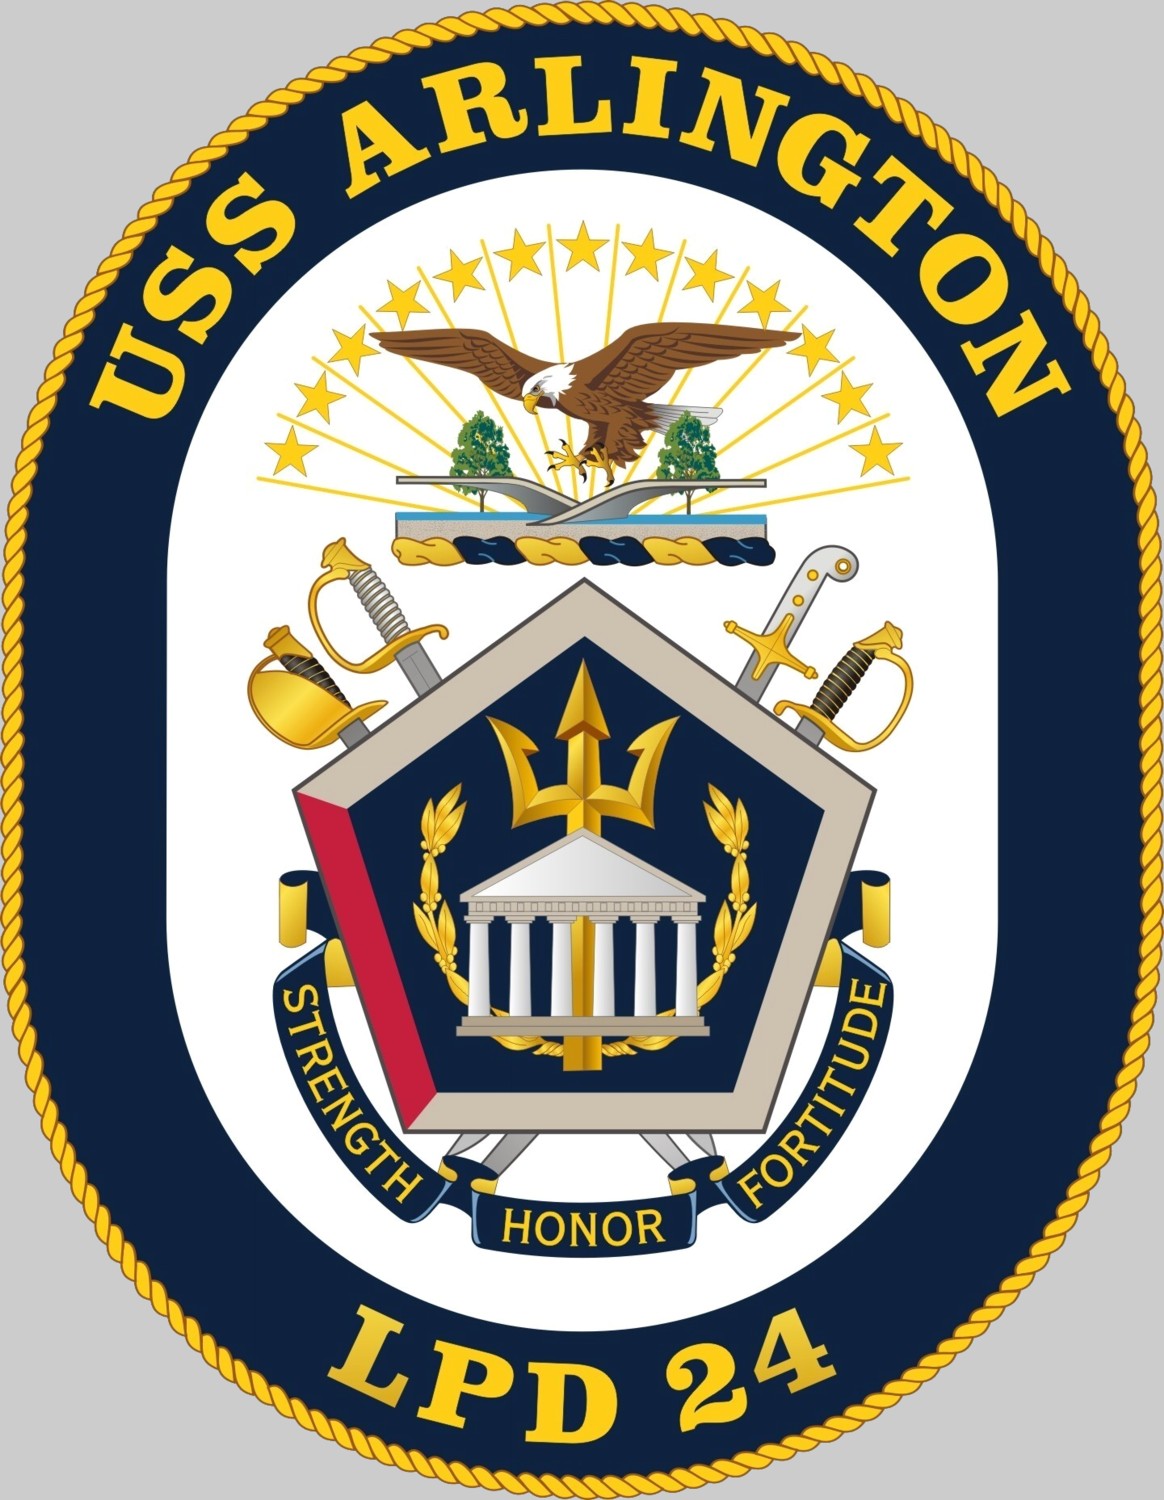 lpd-24 uss arlington insignia crest patch badge amphibious transport dock ship navy 02x